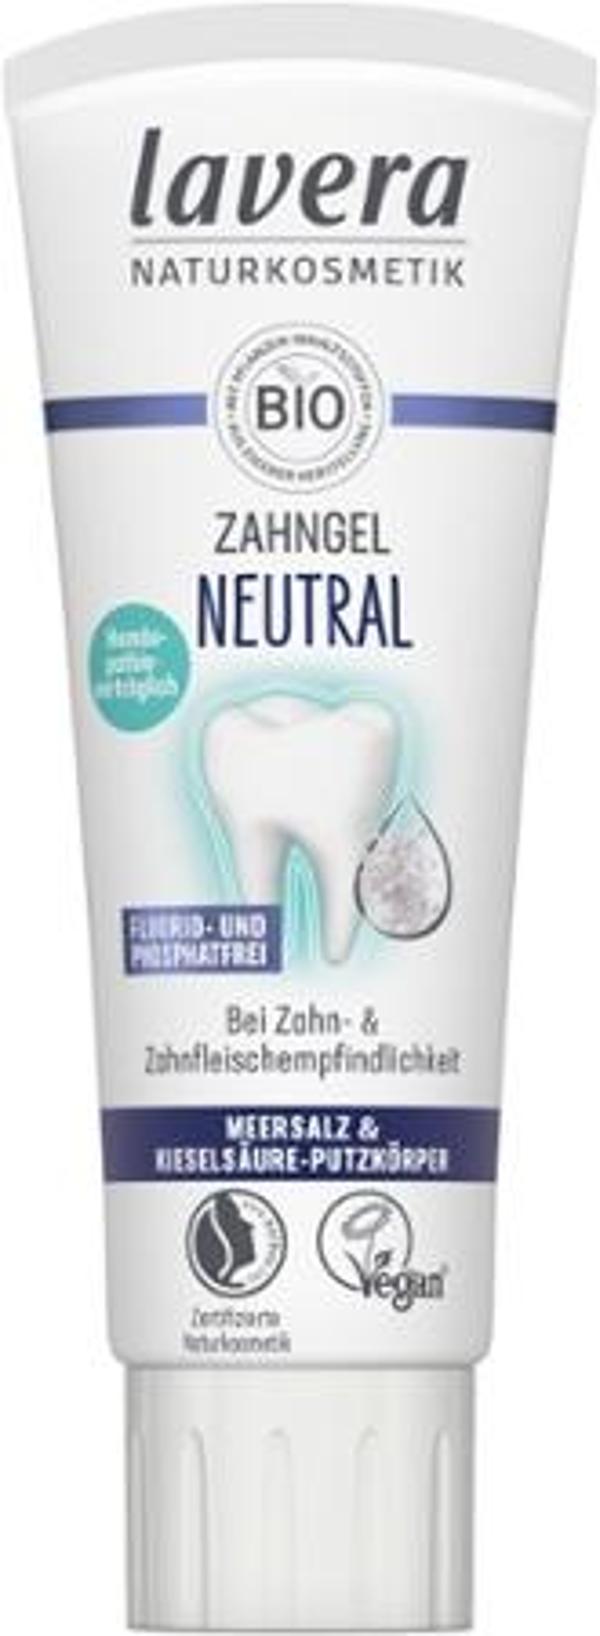 Produktfoto zu Zahngel neutral 75ml